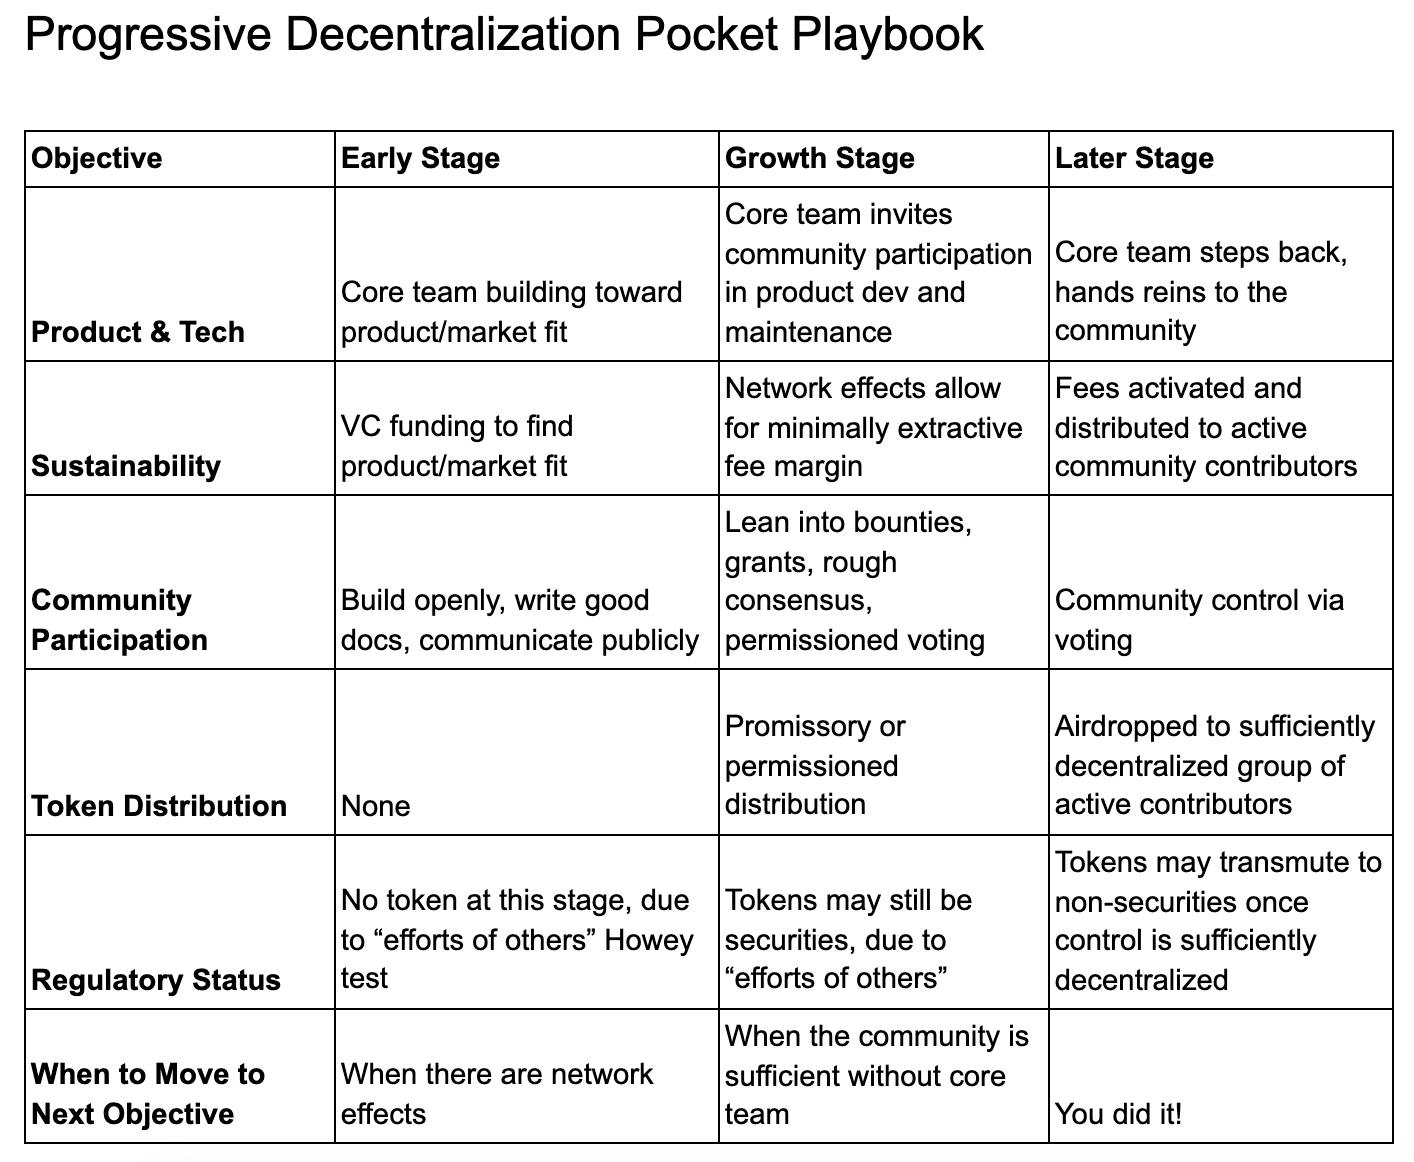 Progressive decentralization pocket playbook